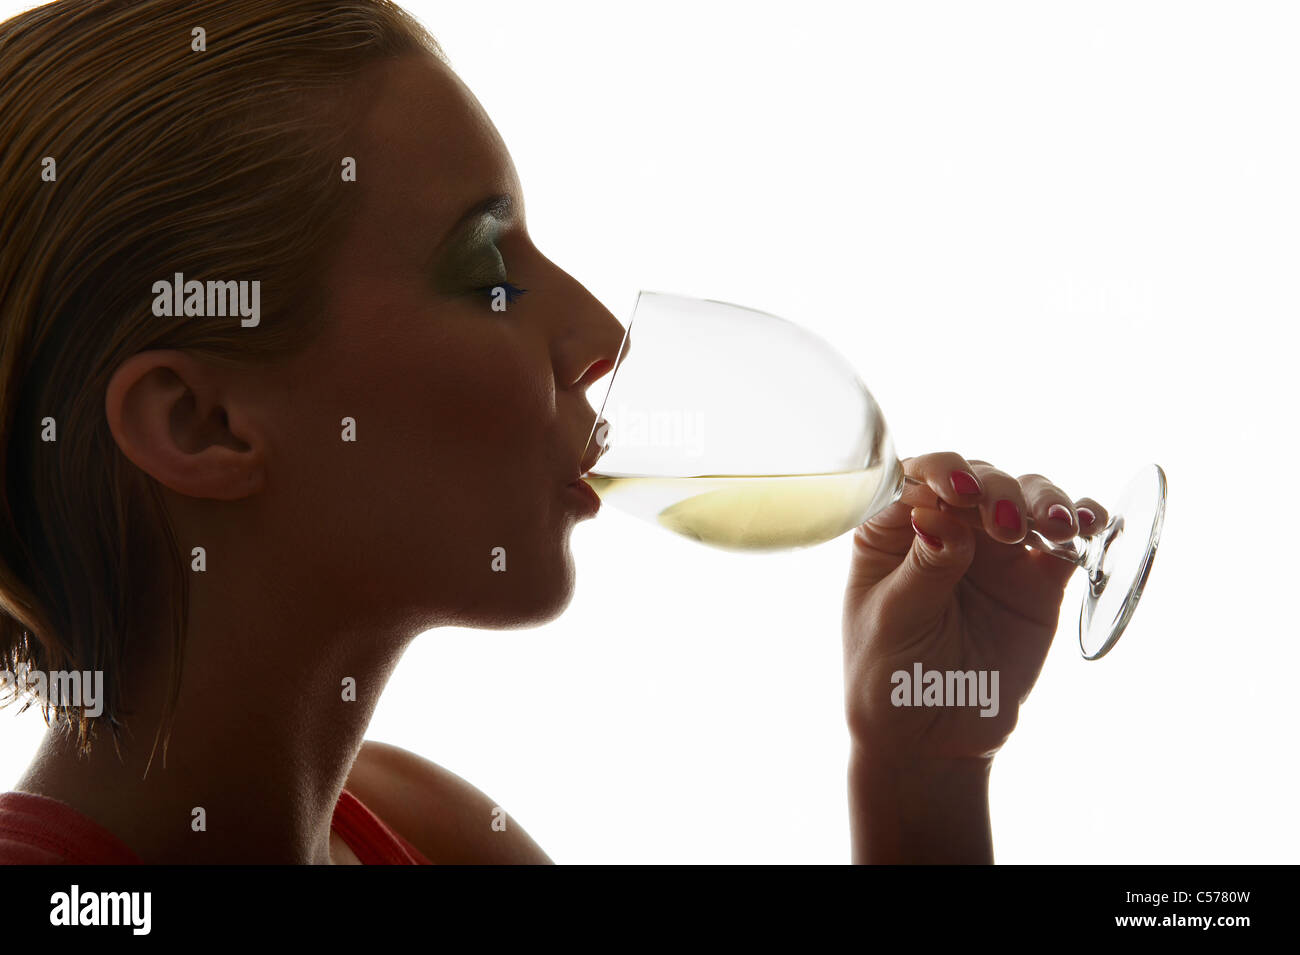 Woman drinking glass of wine Stock Photo